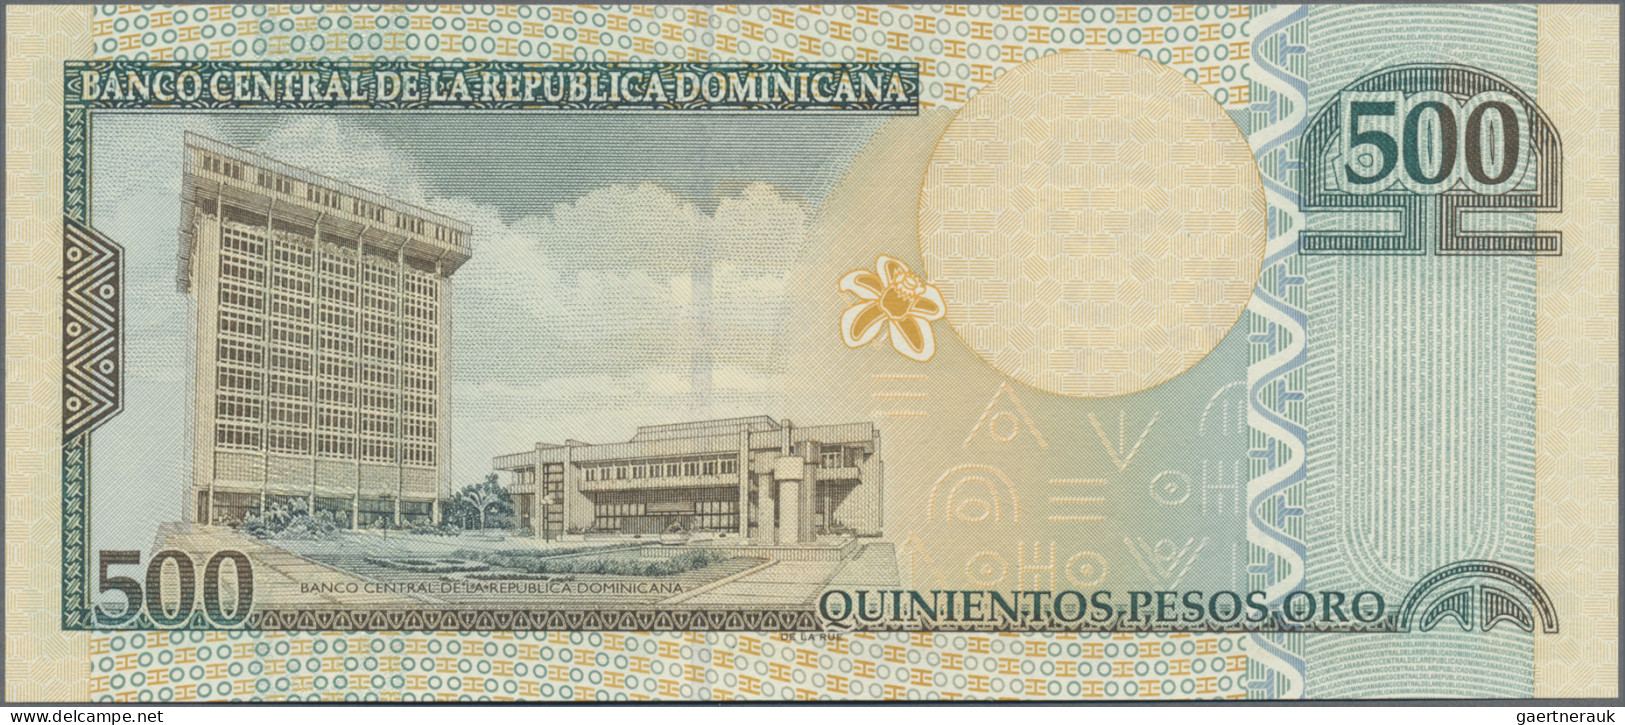 Dominican Republic: Banco Central de la República Dominicana, huge lot with 27 b